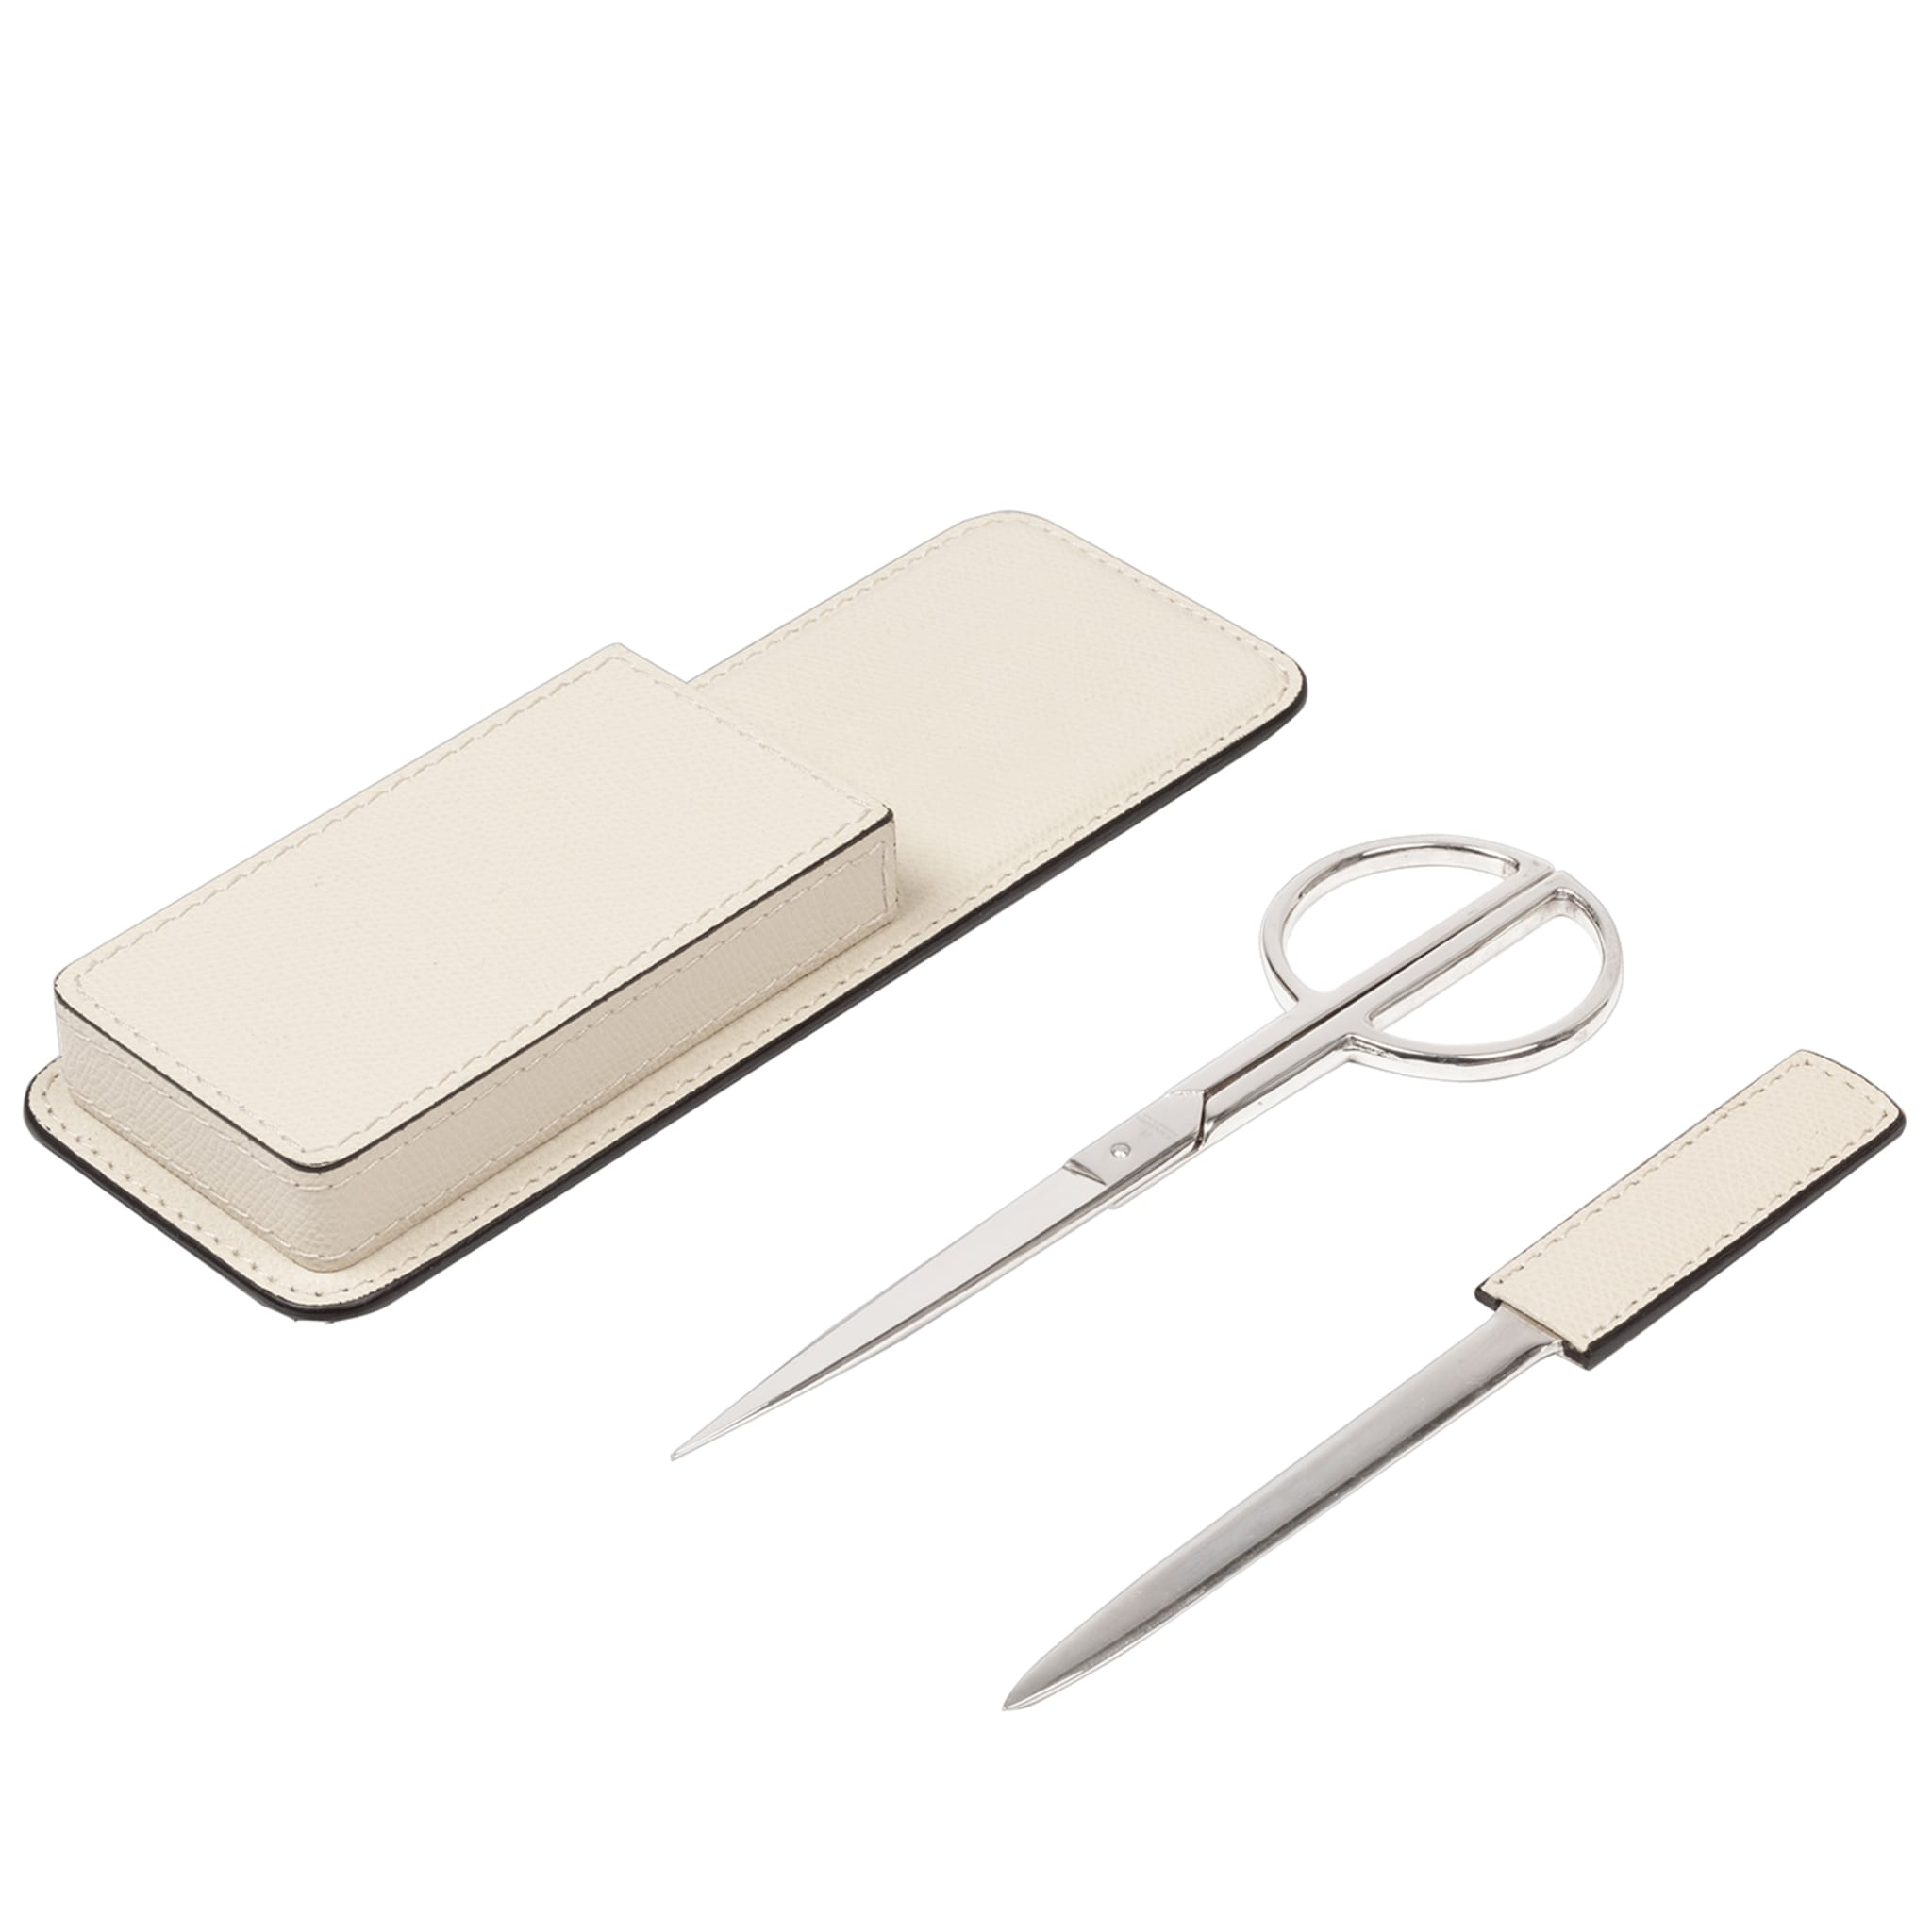 Charles Scissors & Paper Knife Set - Alternative view 1